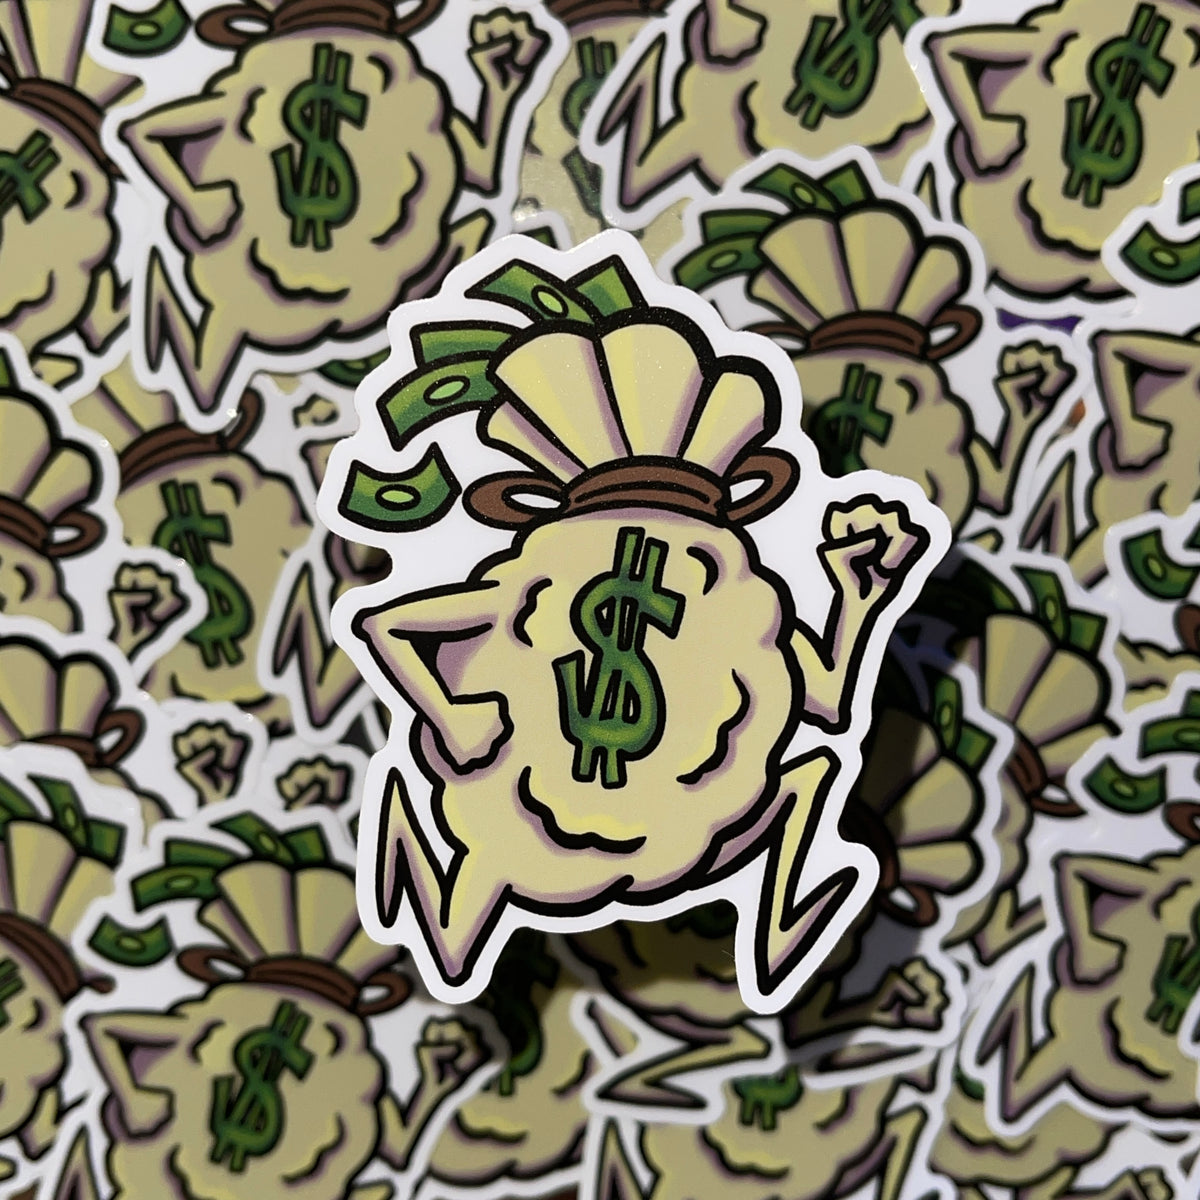 The Money Bag Sticker